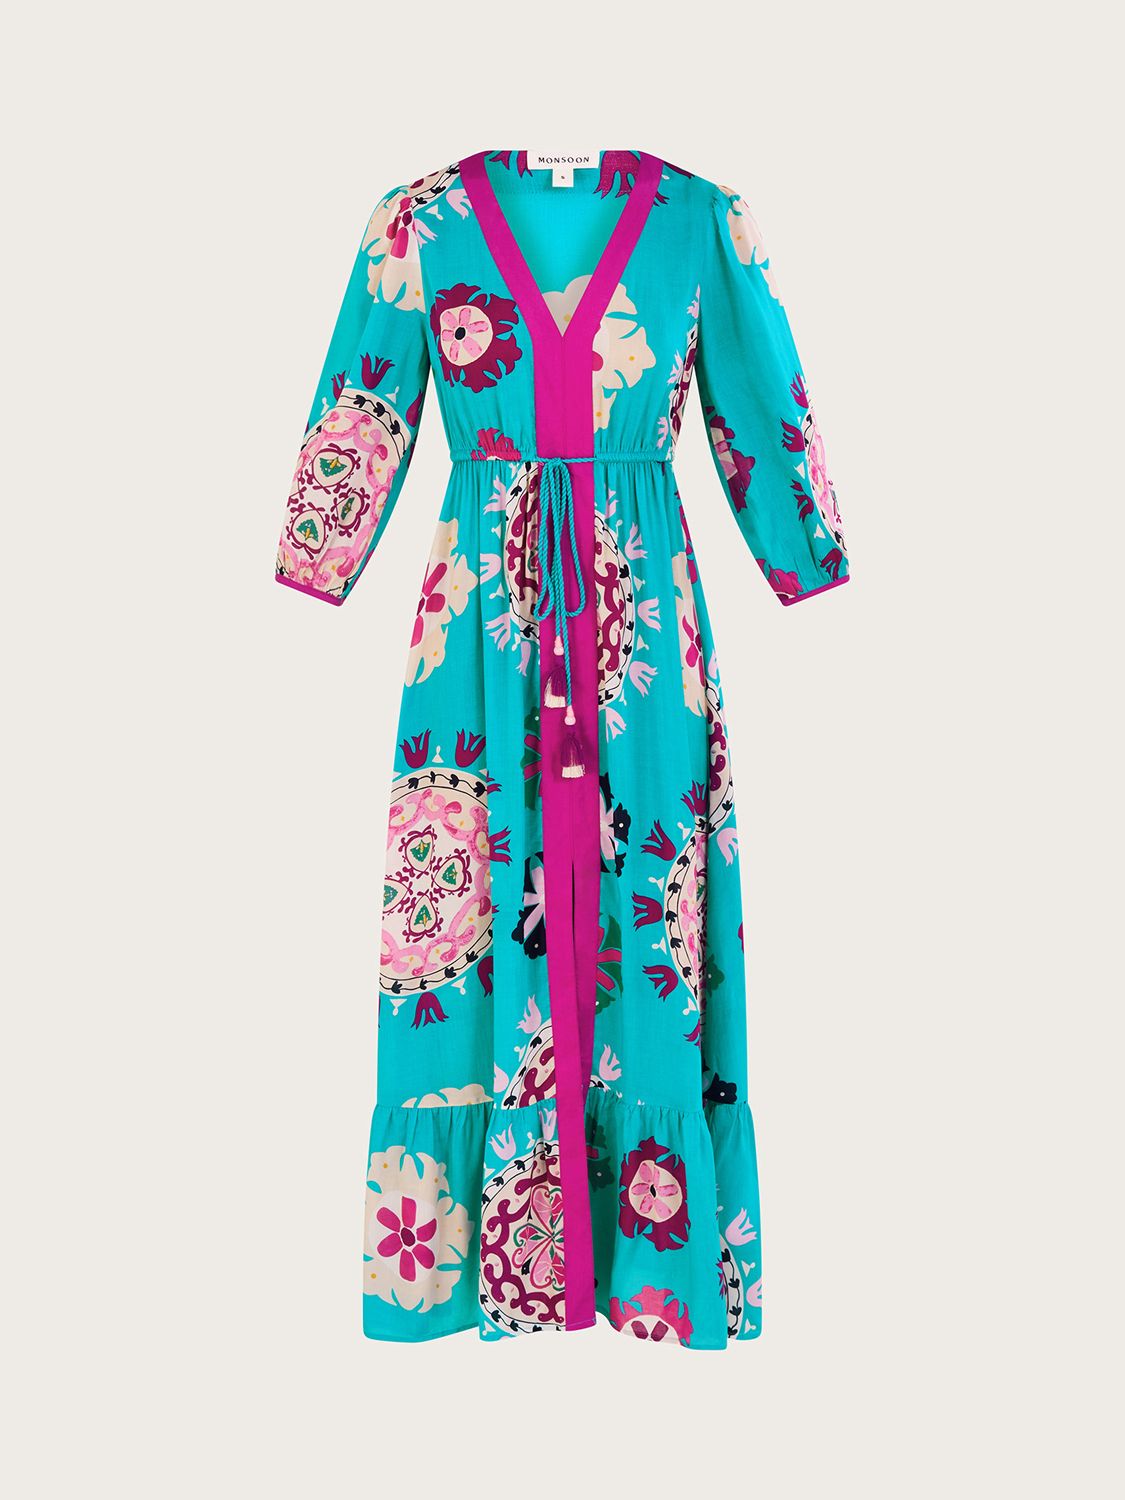 Monsoon Bonita Geometric Print Dress, Turquoise, S